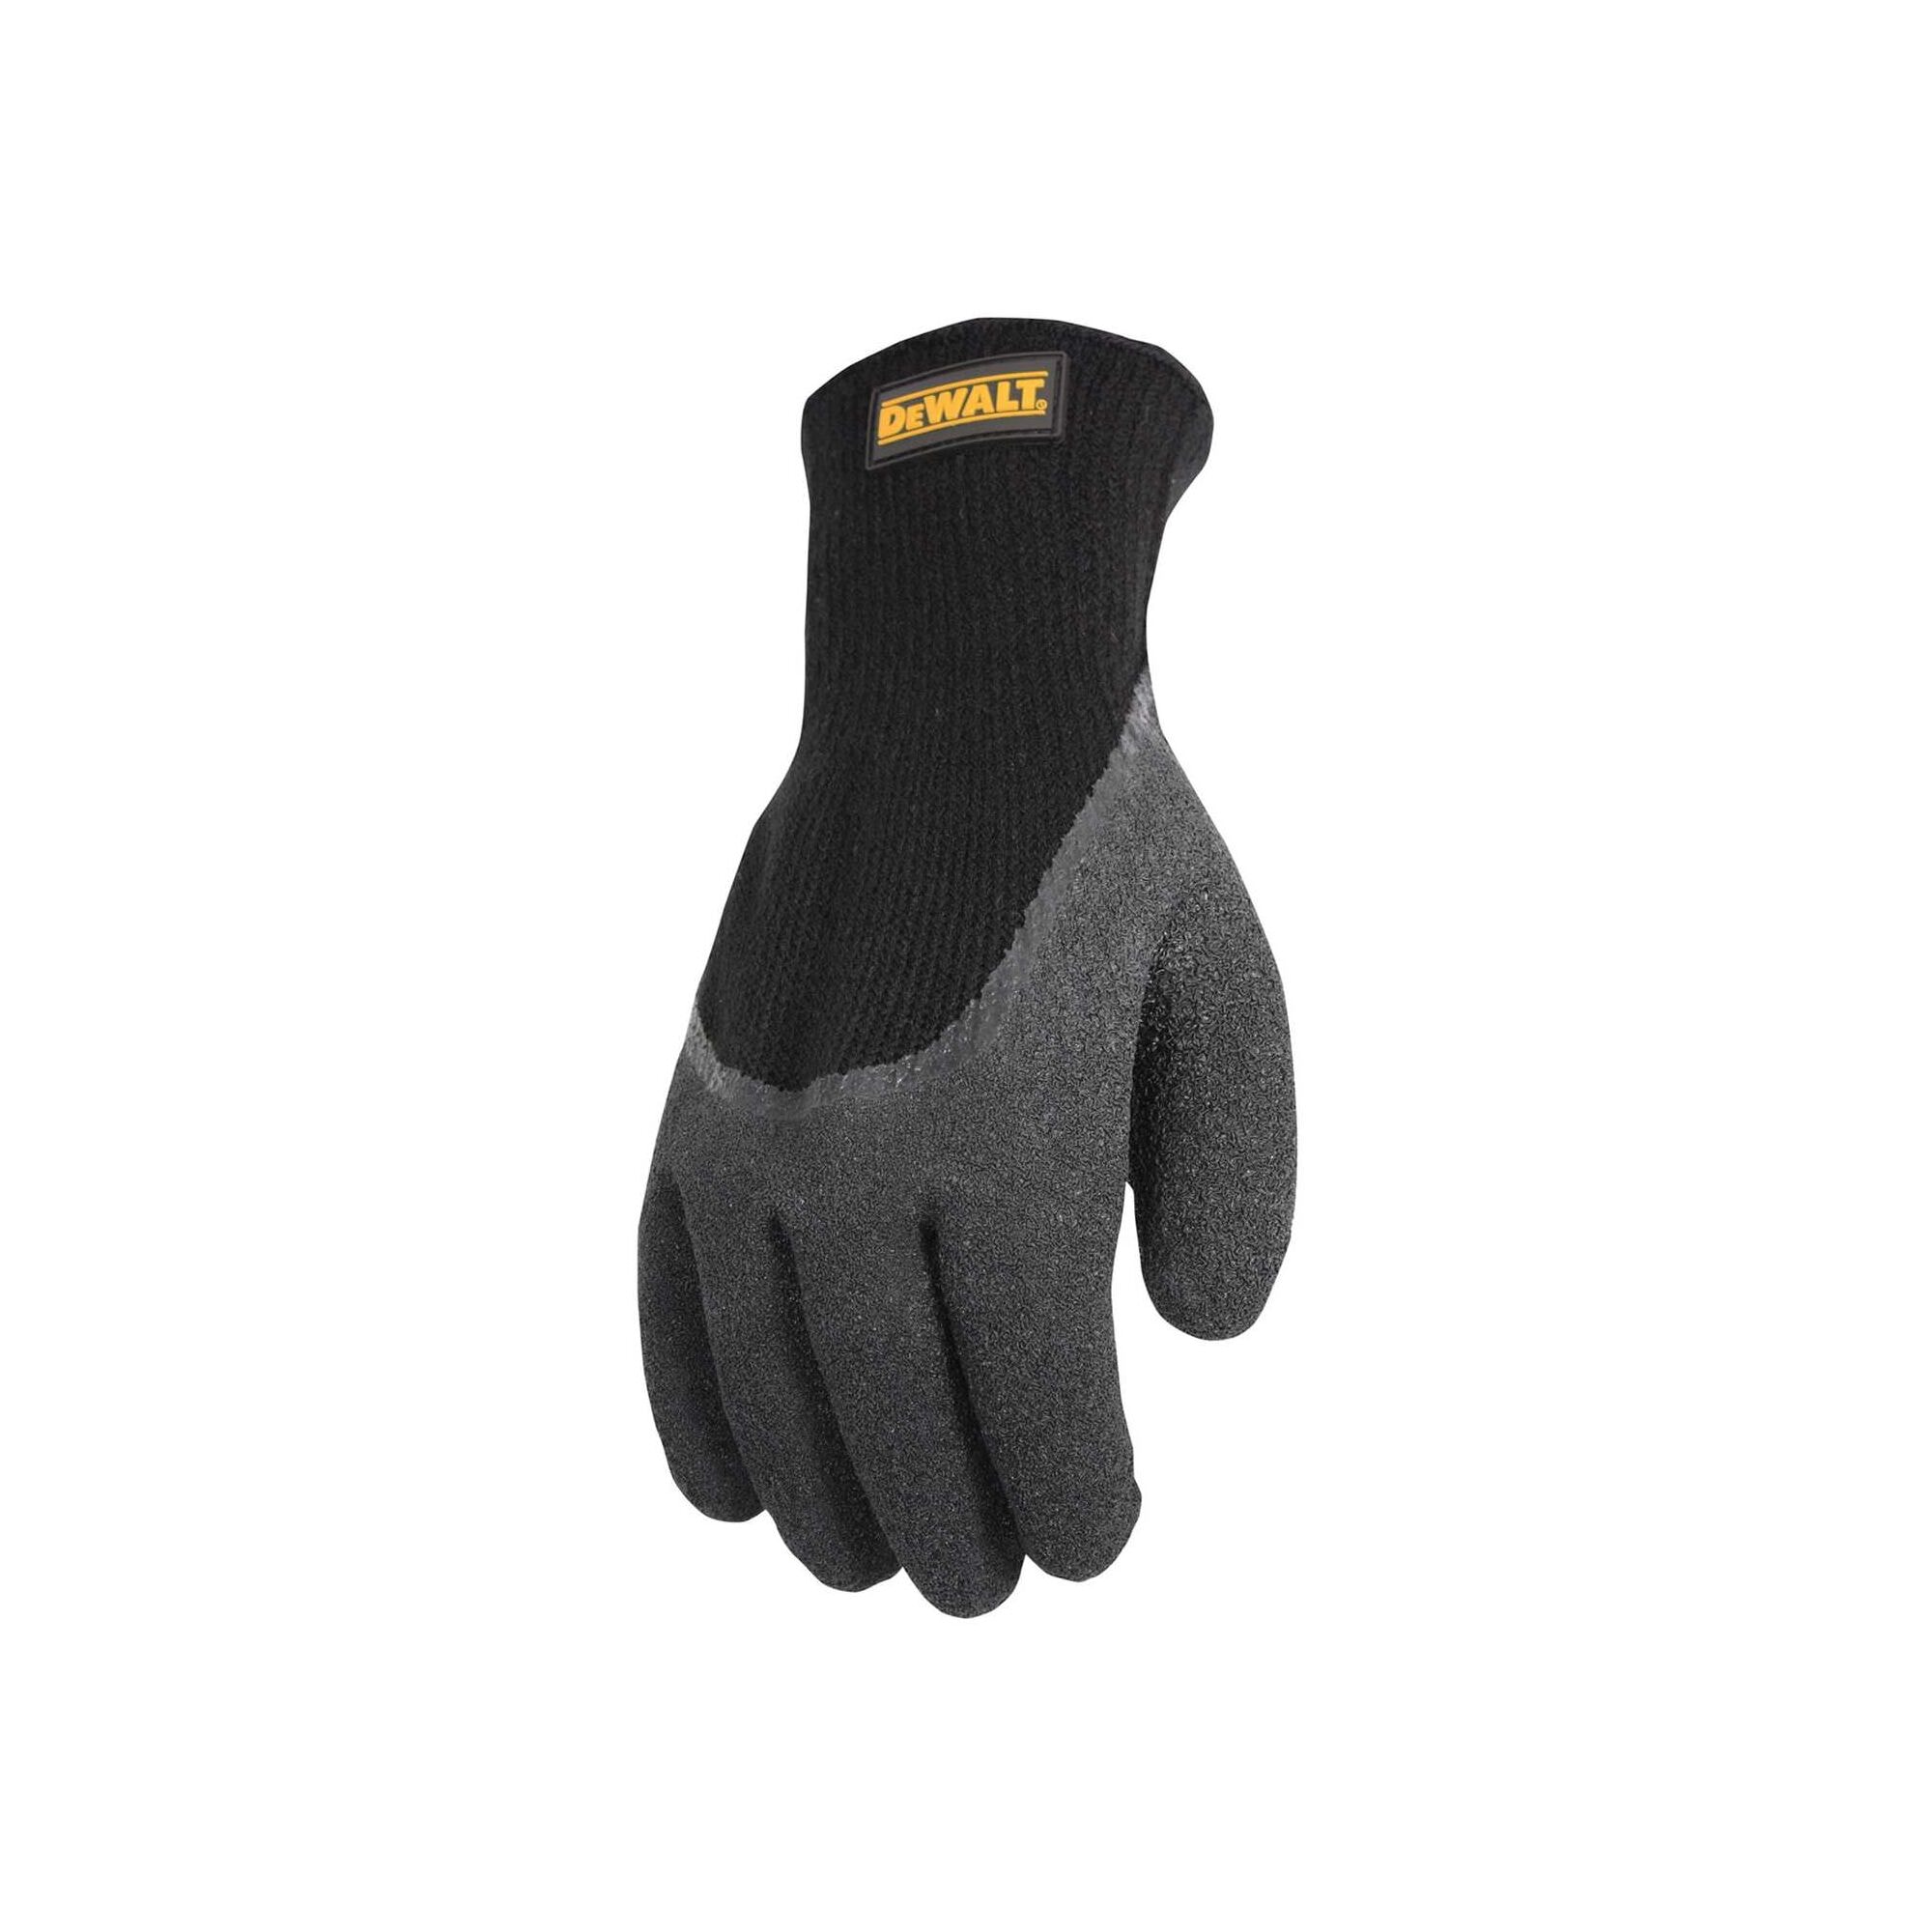 Dewalt DPG737L Thermal Insulated Grip Glove 2 In 1 Design Large 